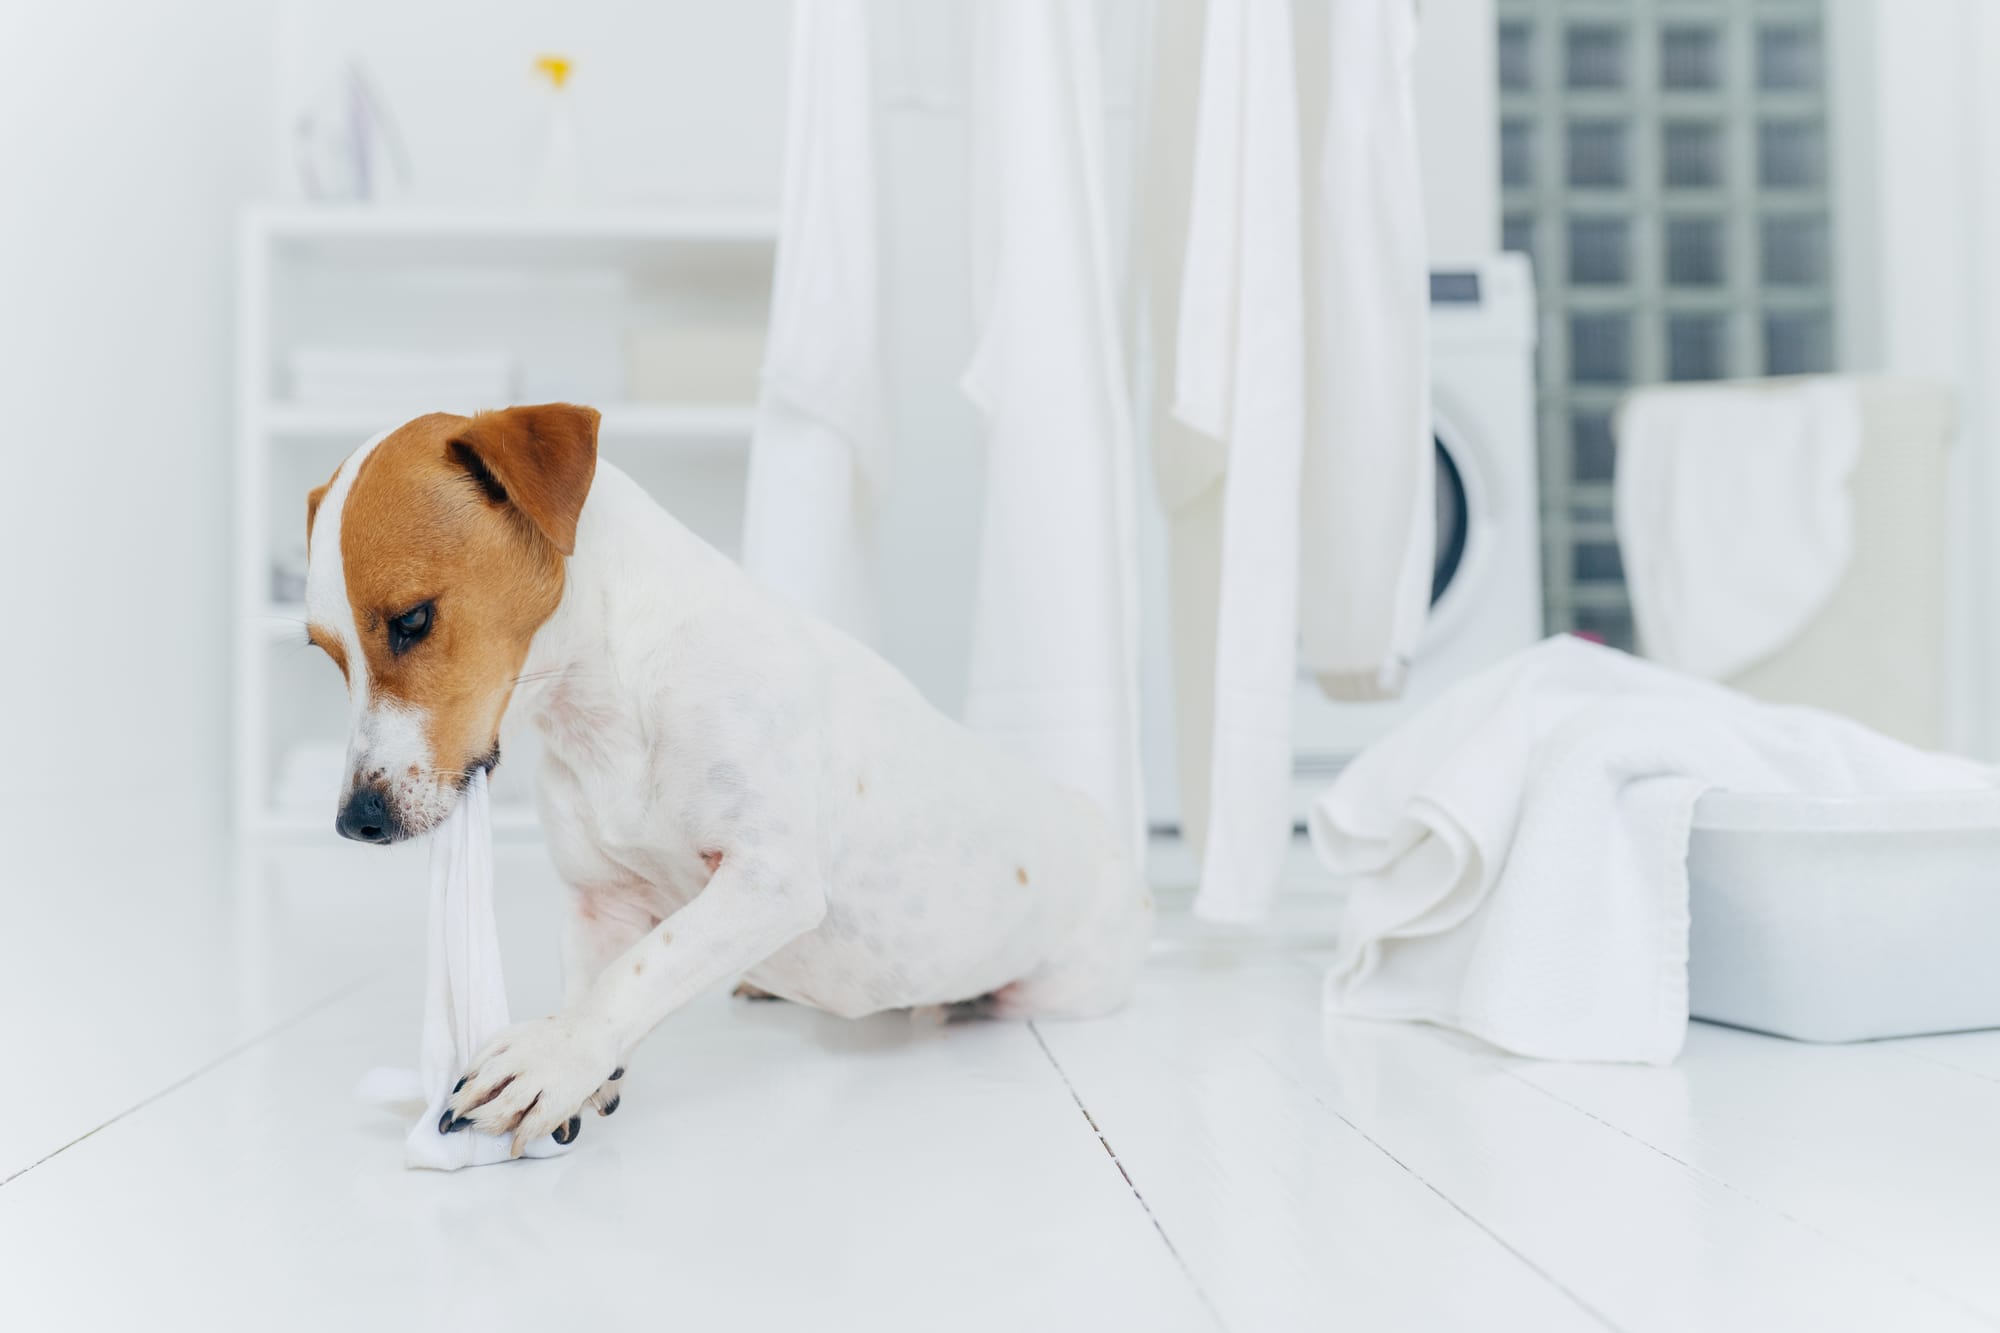 Dog Kicks Back Leg After Bathroom